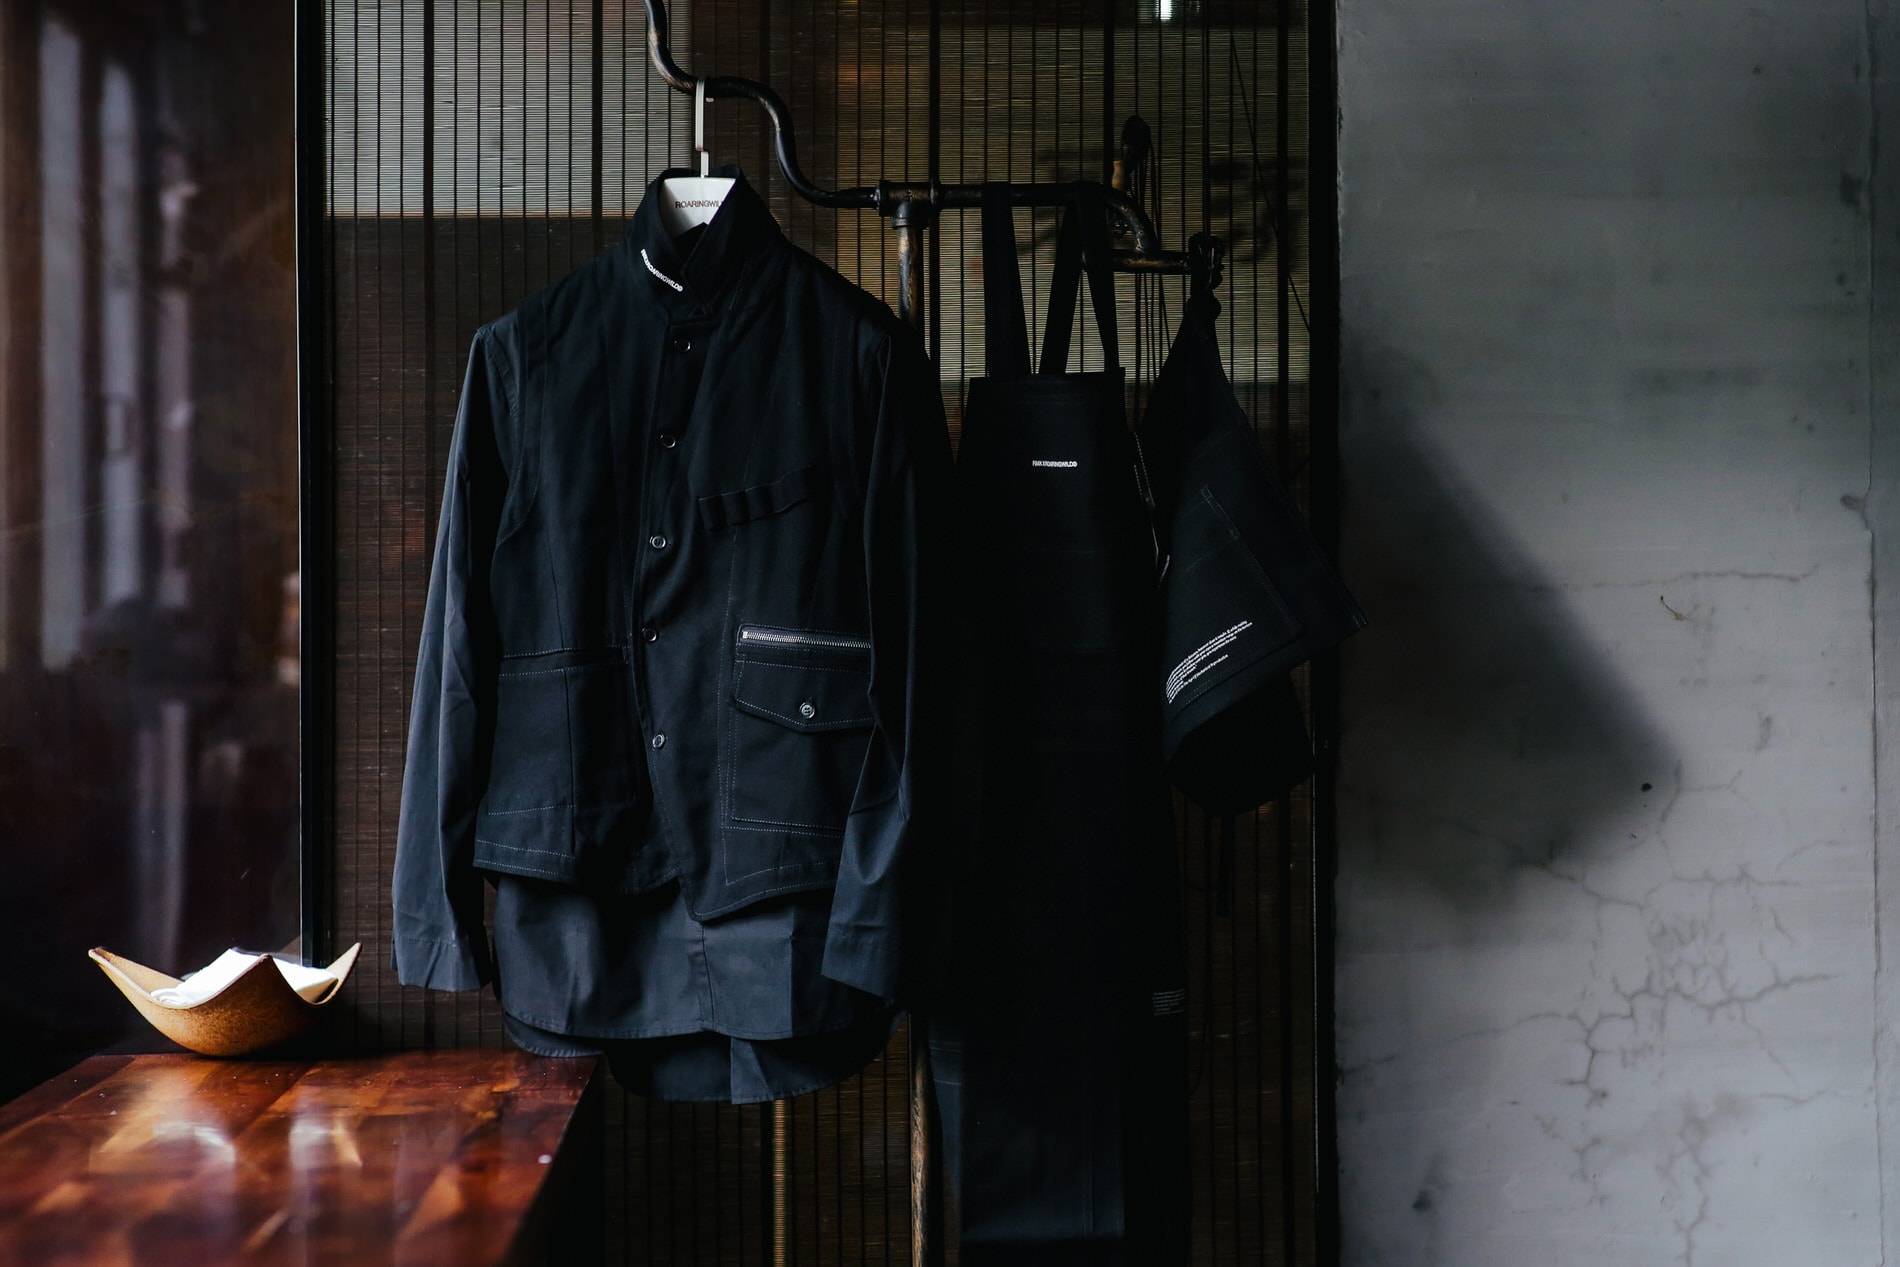 ROARINGWILD 為日式燒酒屋 RMK 打造專屬工作服